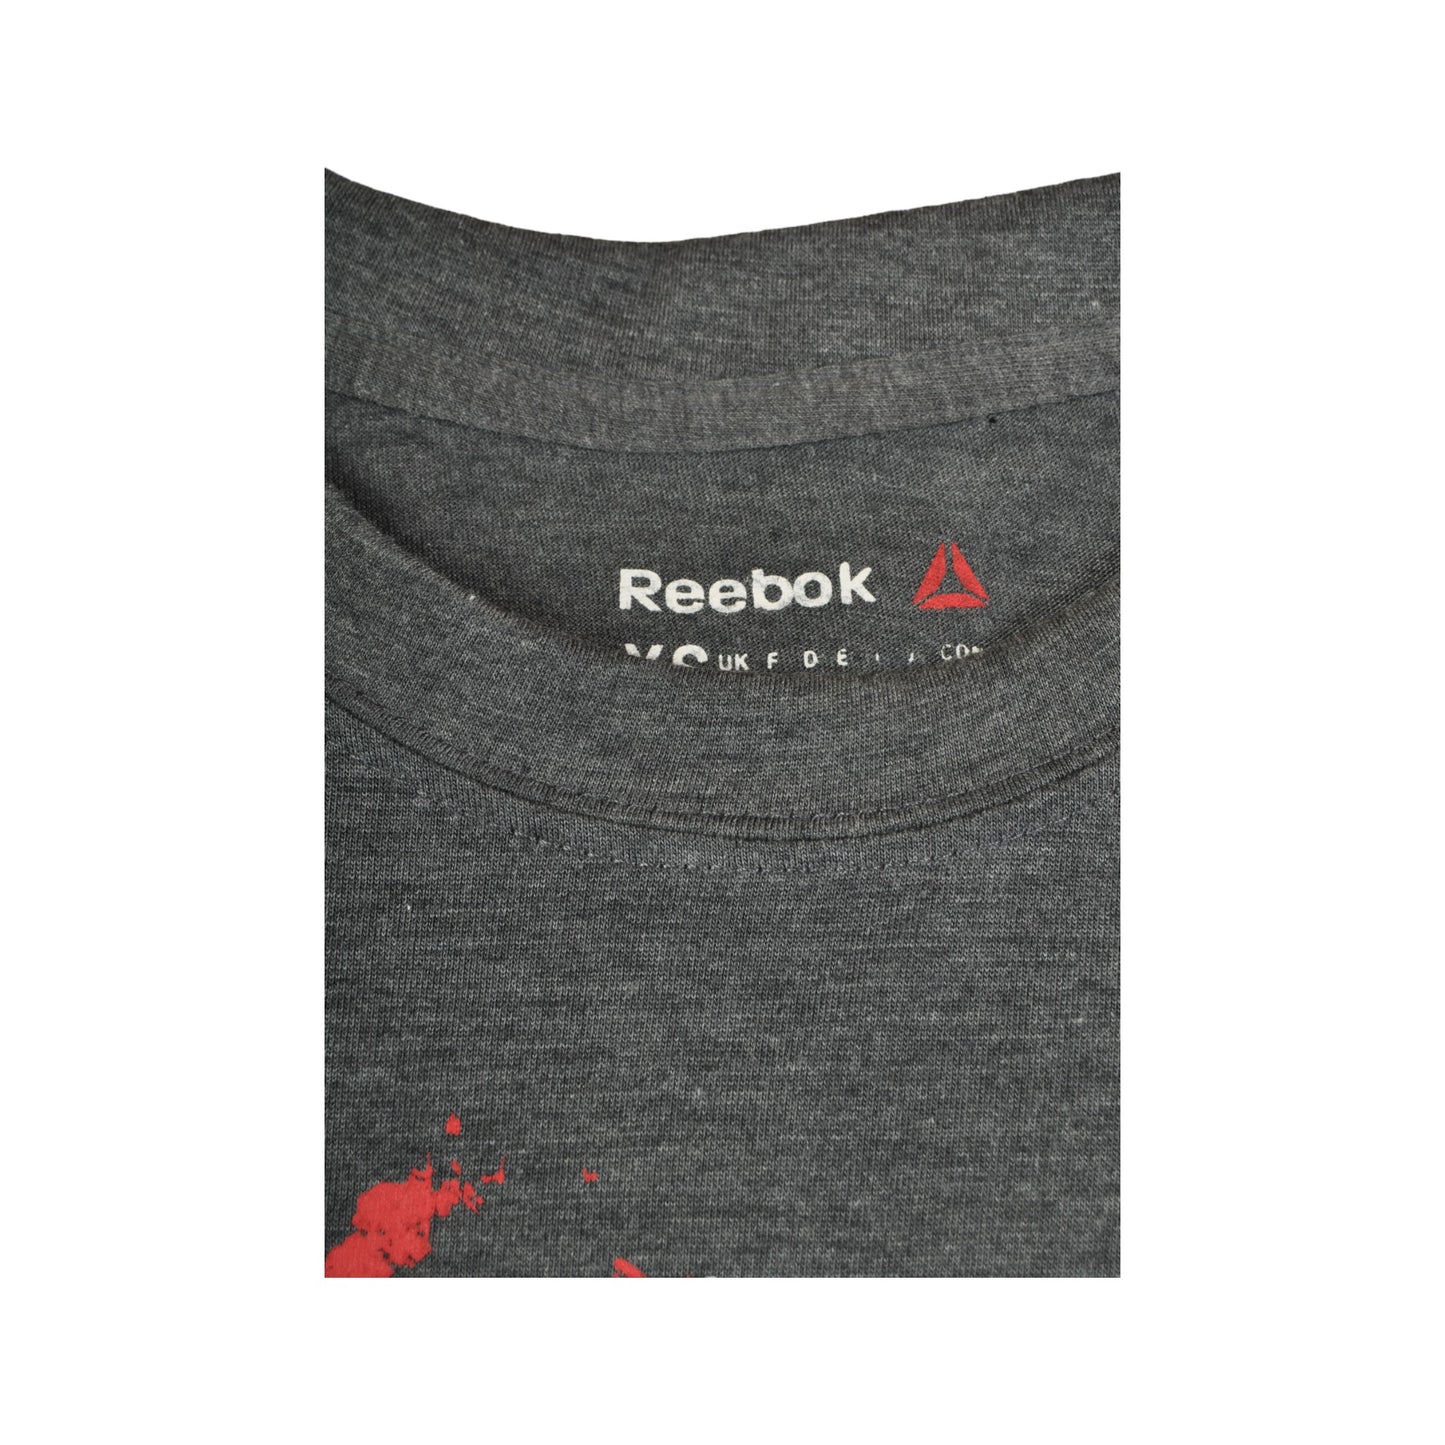 Vintage Reebok Spartan Race T-shirt Grey XS